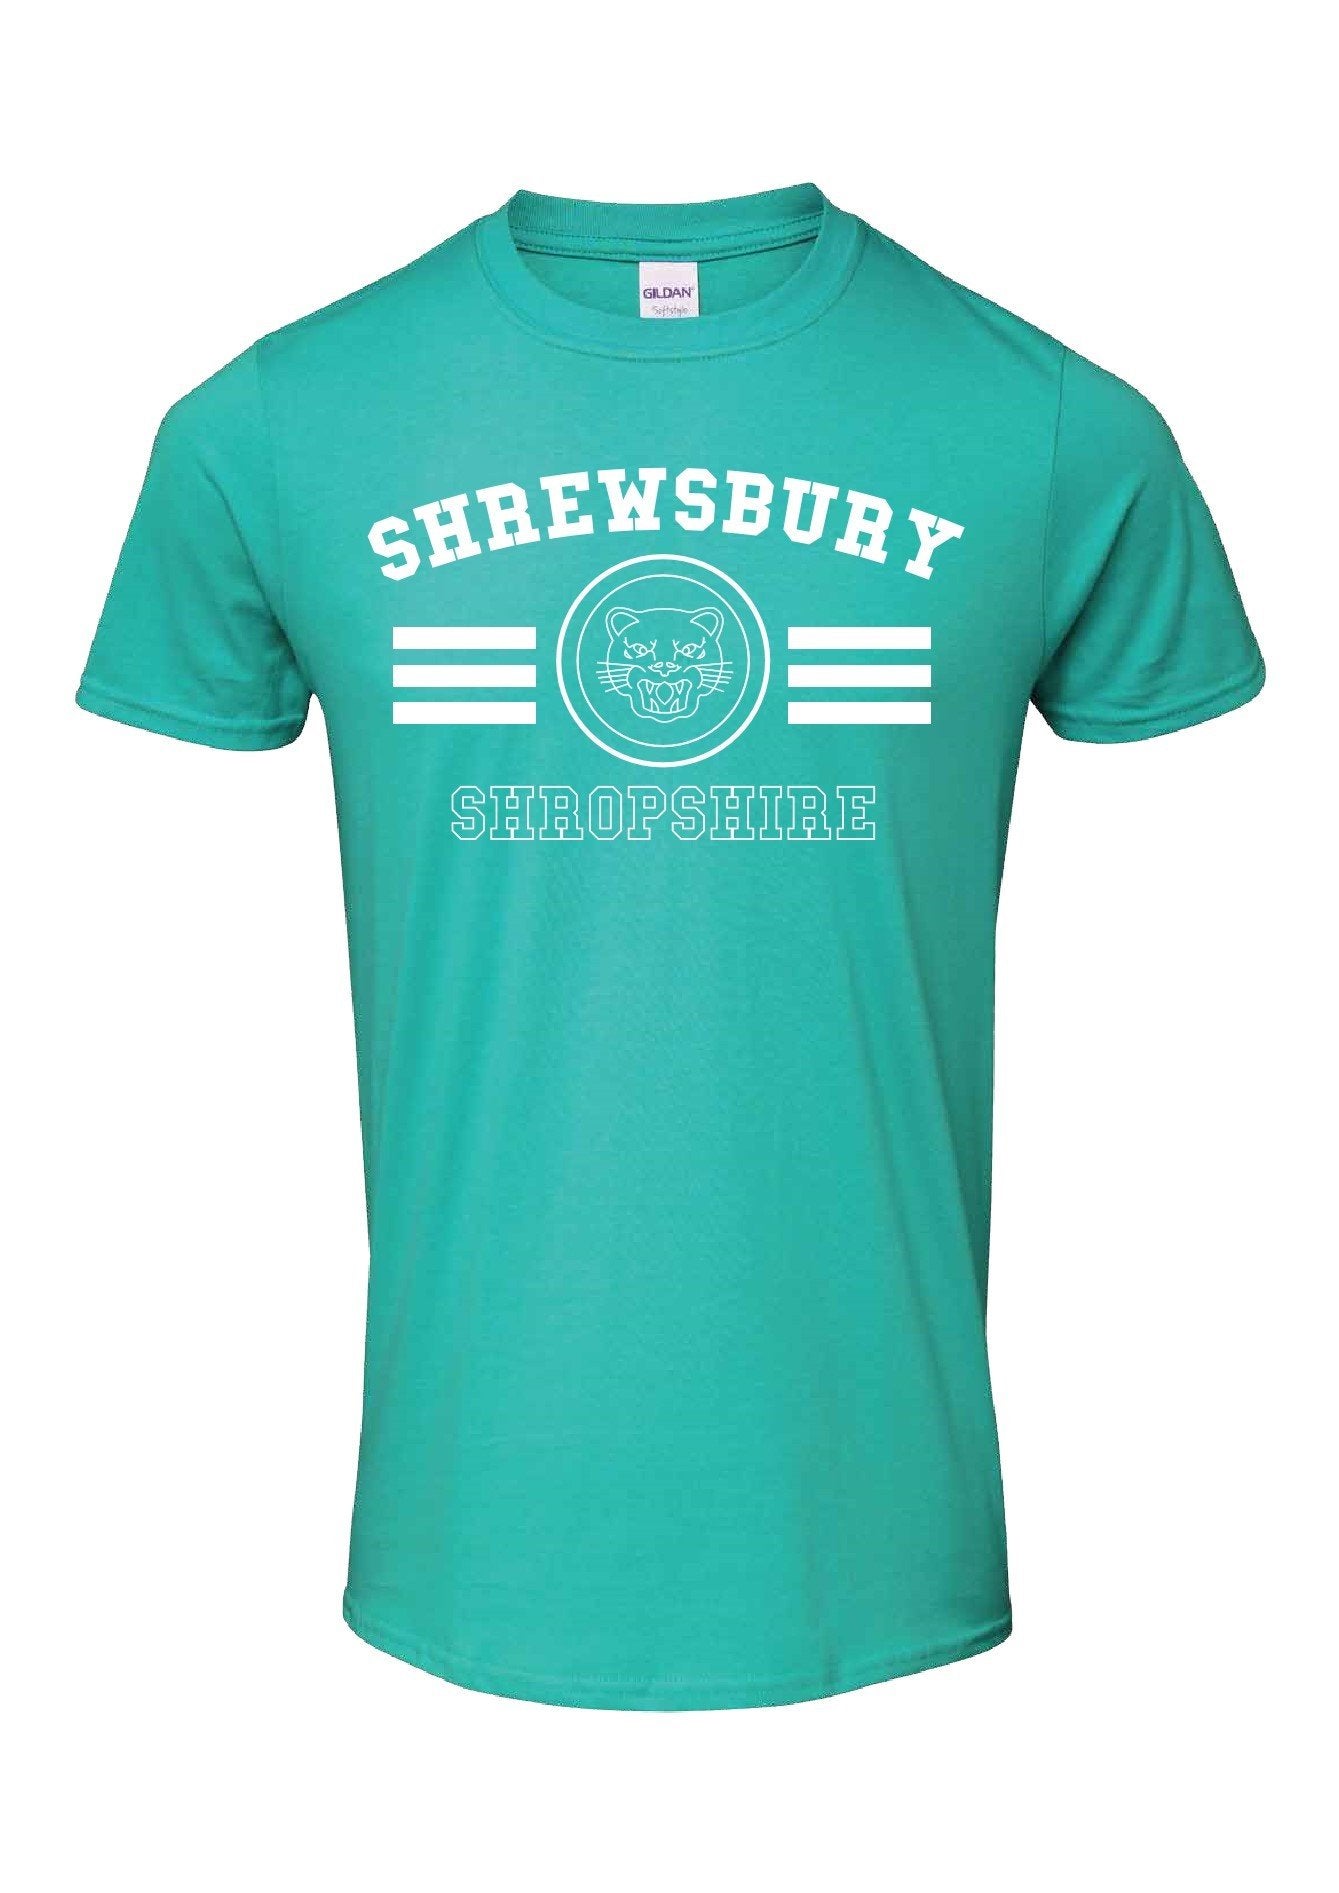 Shrewsbury Tiger T-shirt - Jade - S